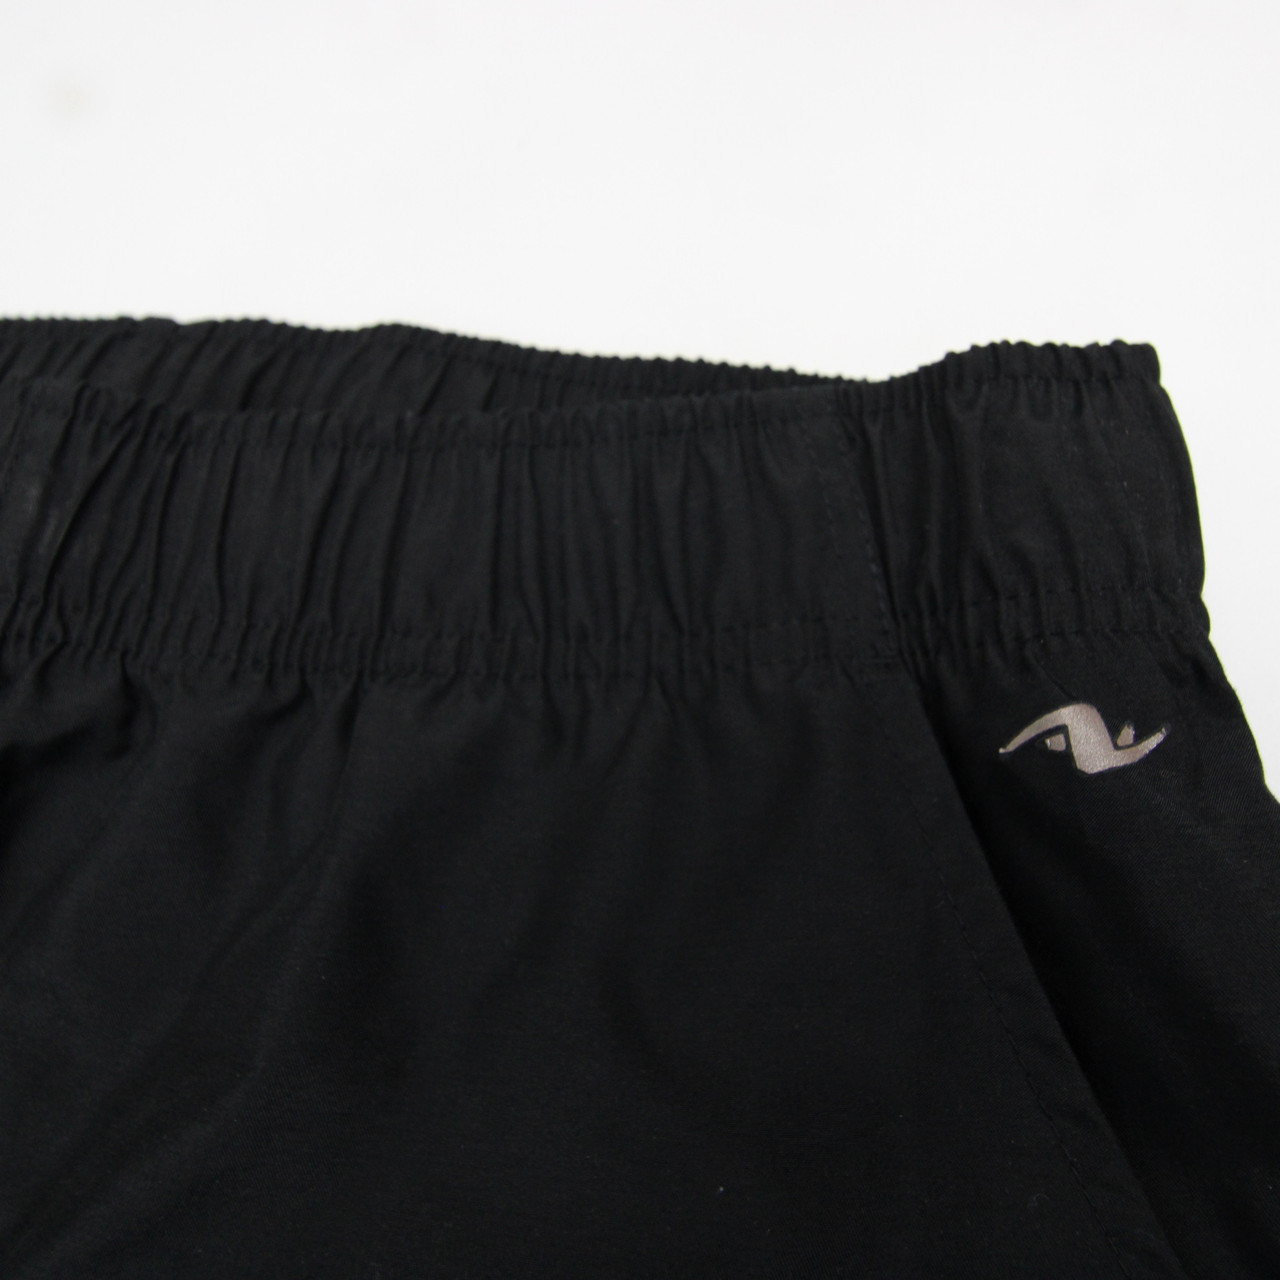 Athletic Works Athletic Pants Women's Black/White Used L - Locker